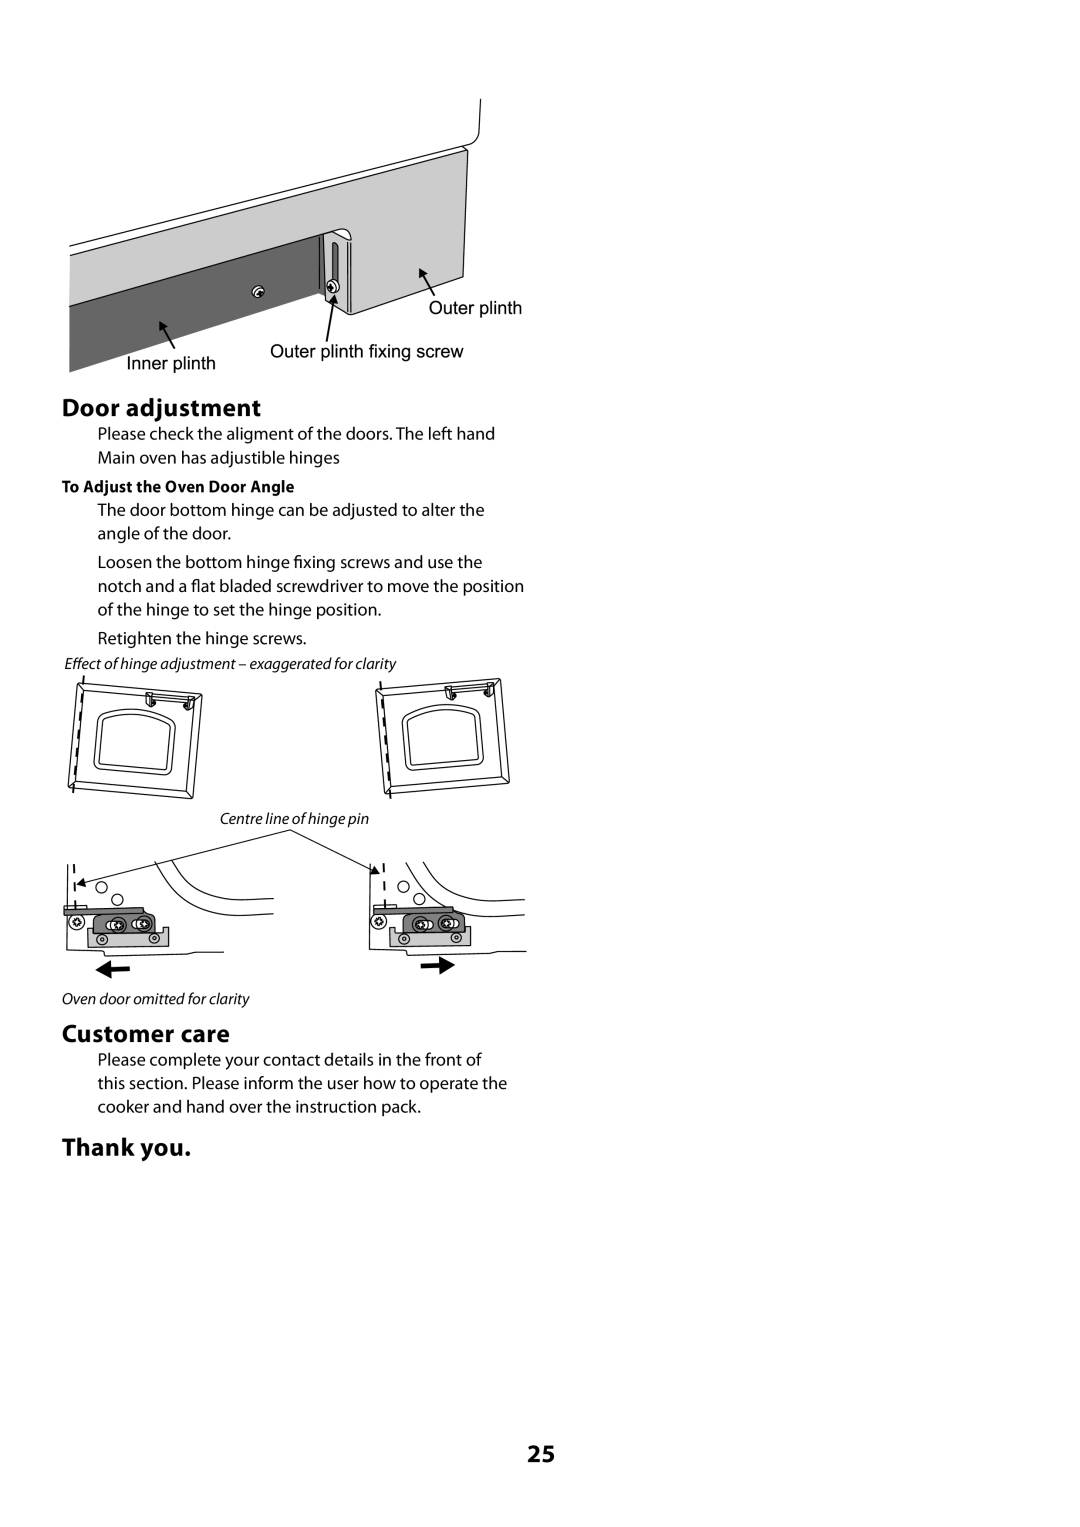 Rangemaster U109720 - 01 manual Door adjustment, Customer care, Thank you, To Adjust the Oven Door Angle 